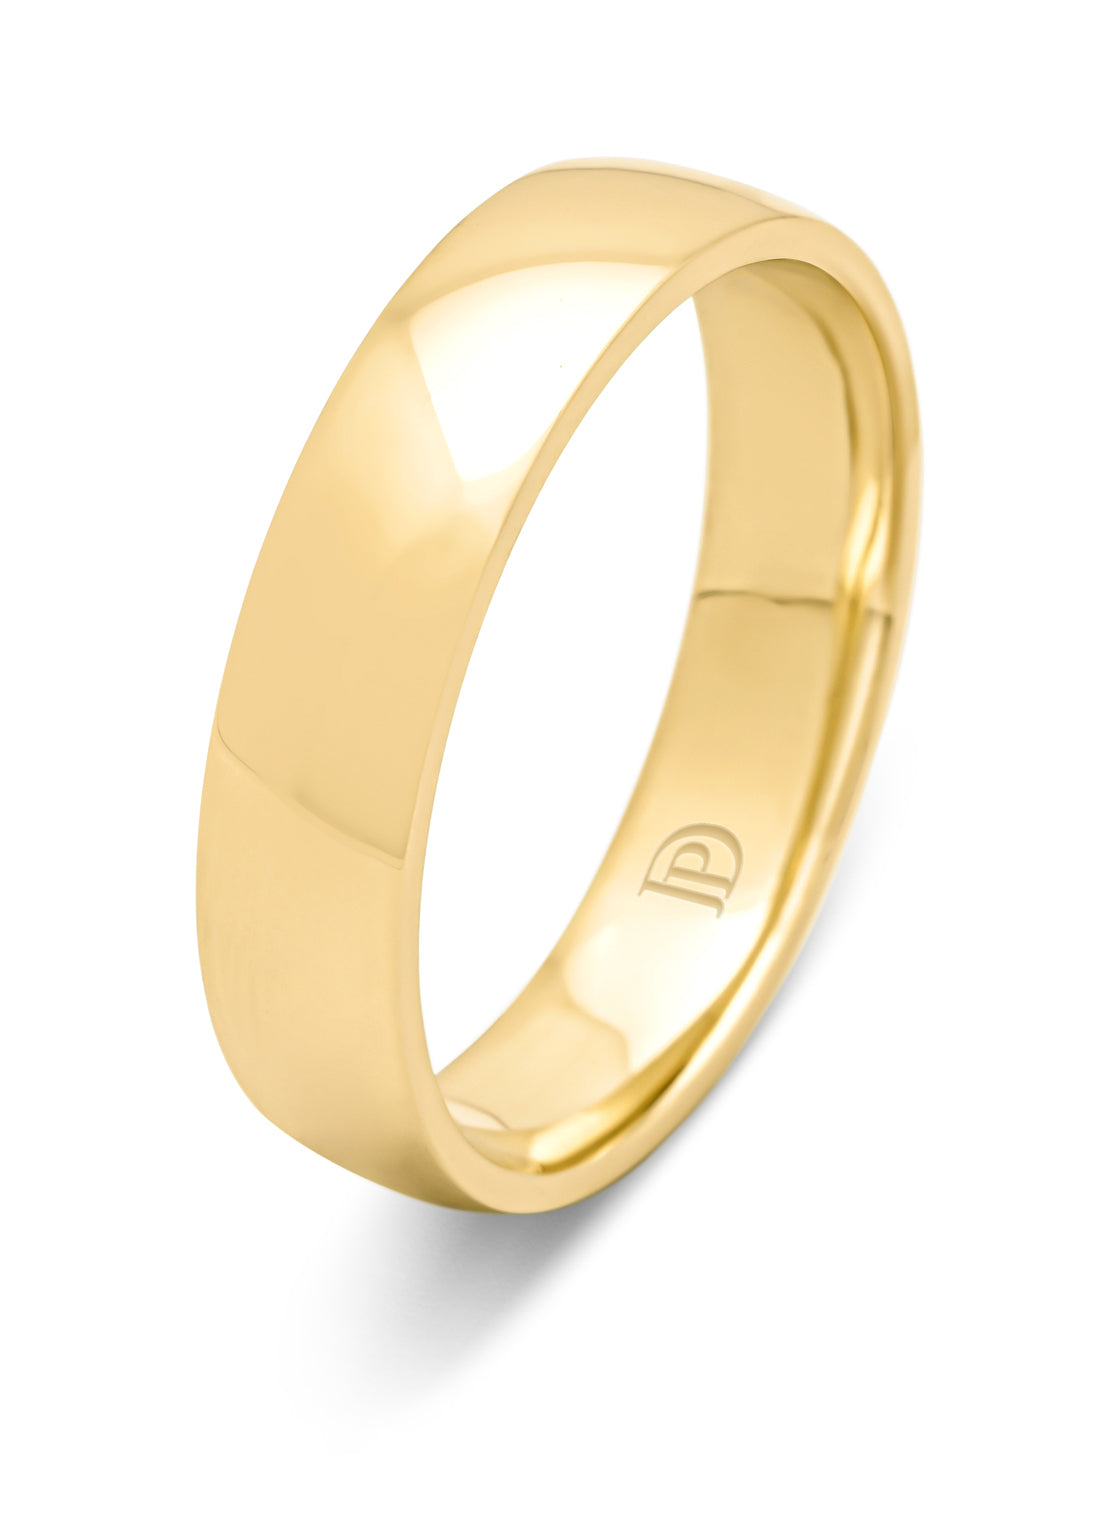 Yellow gold 18 kt wedding ring